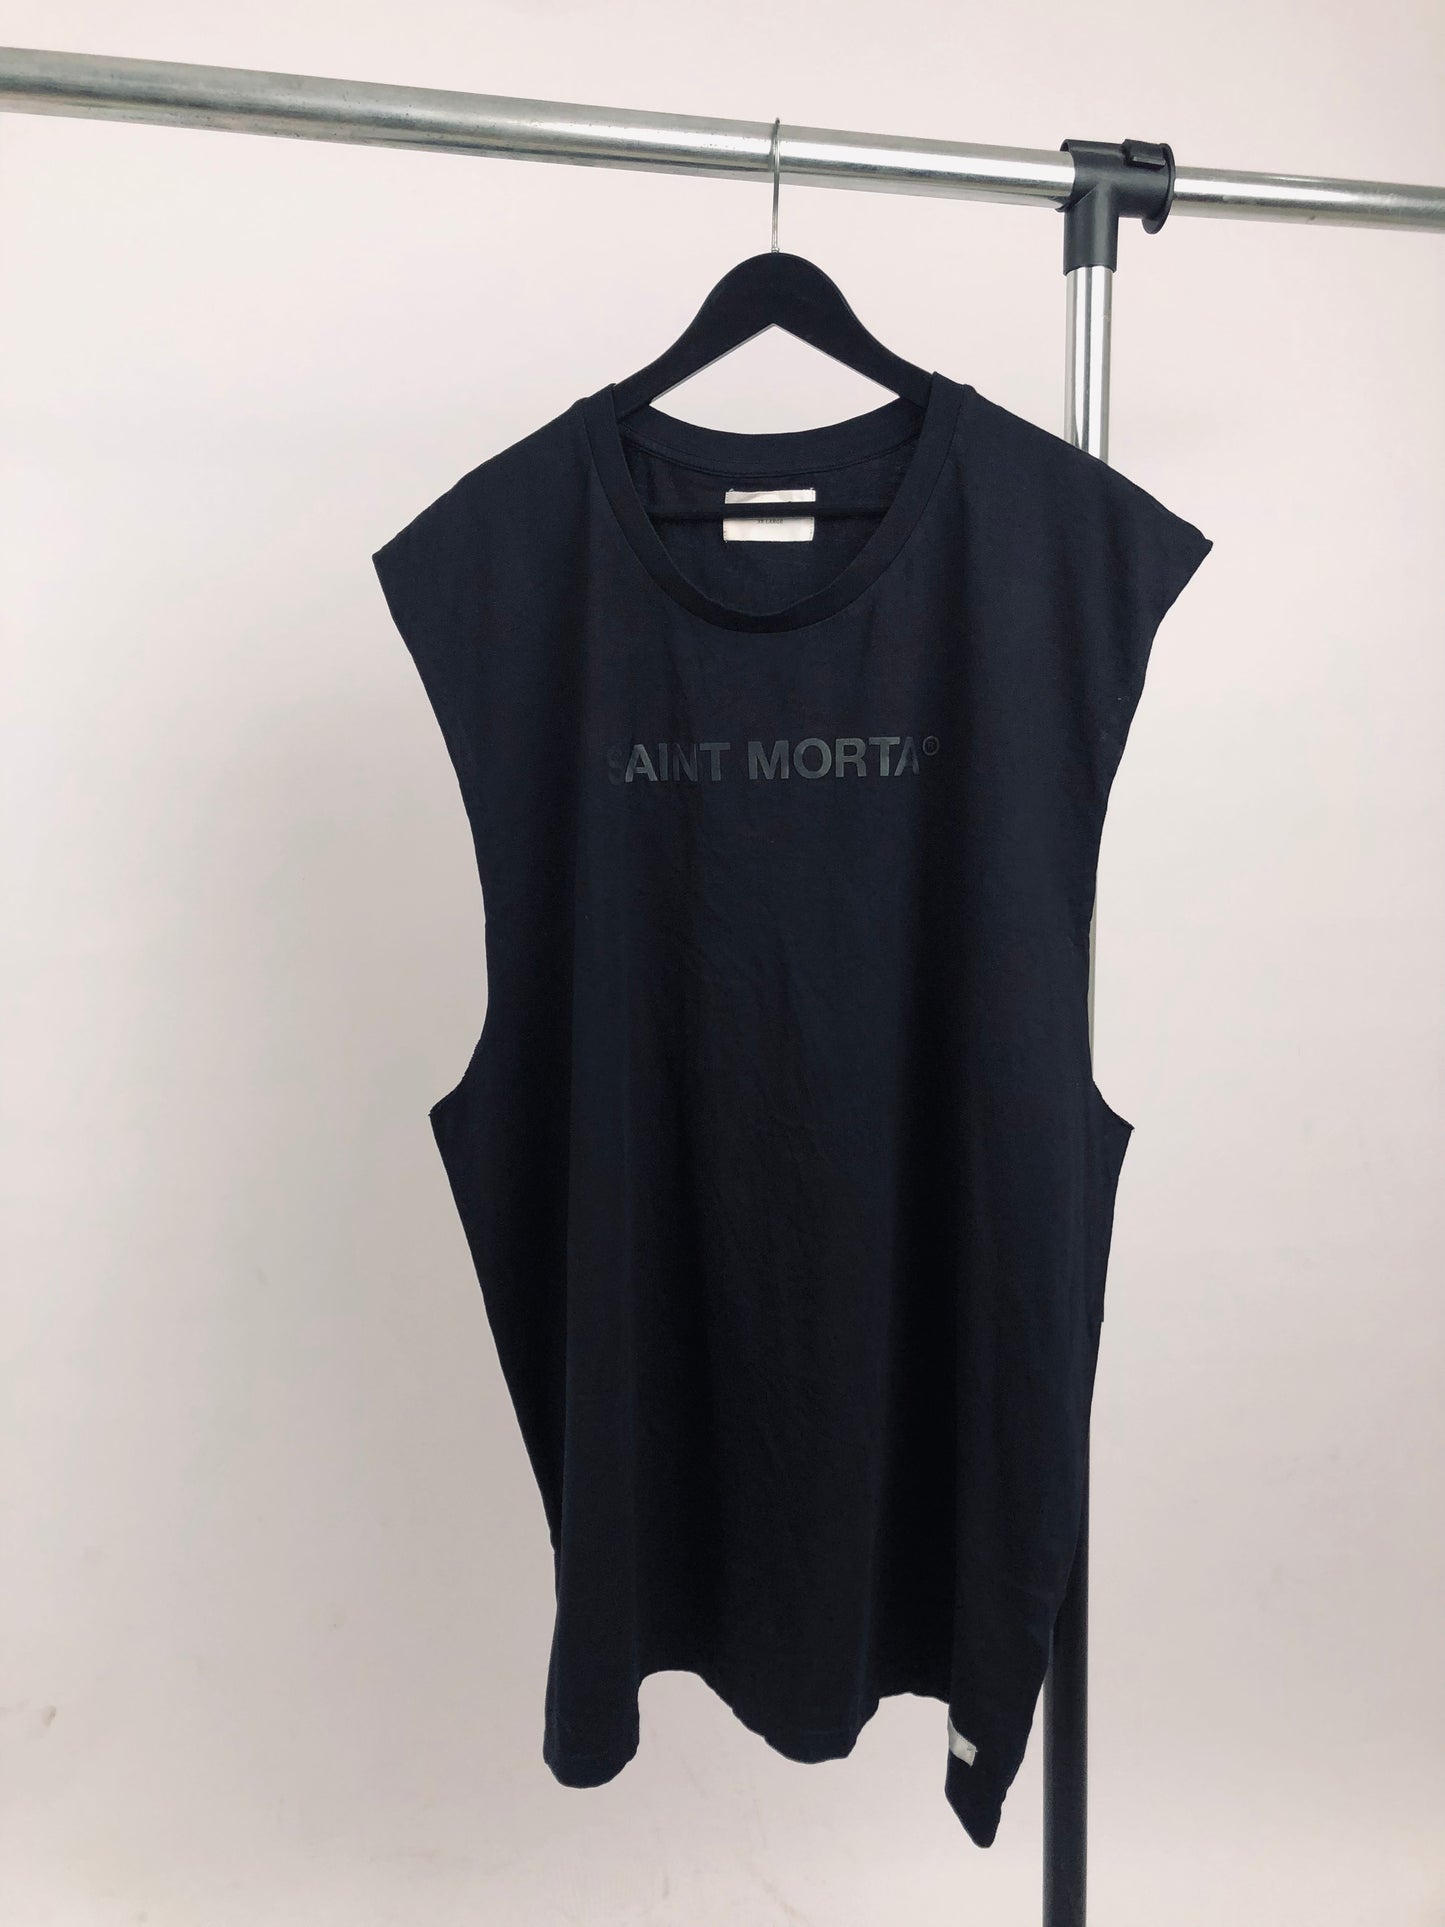 Saint Morta Sleeveless T-shirt in black